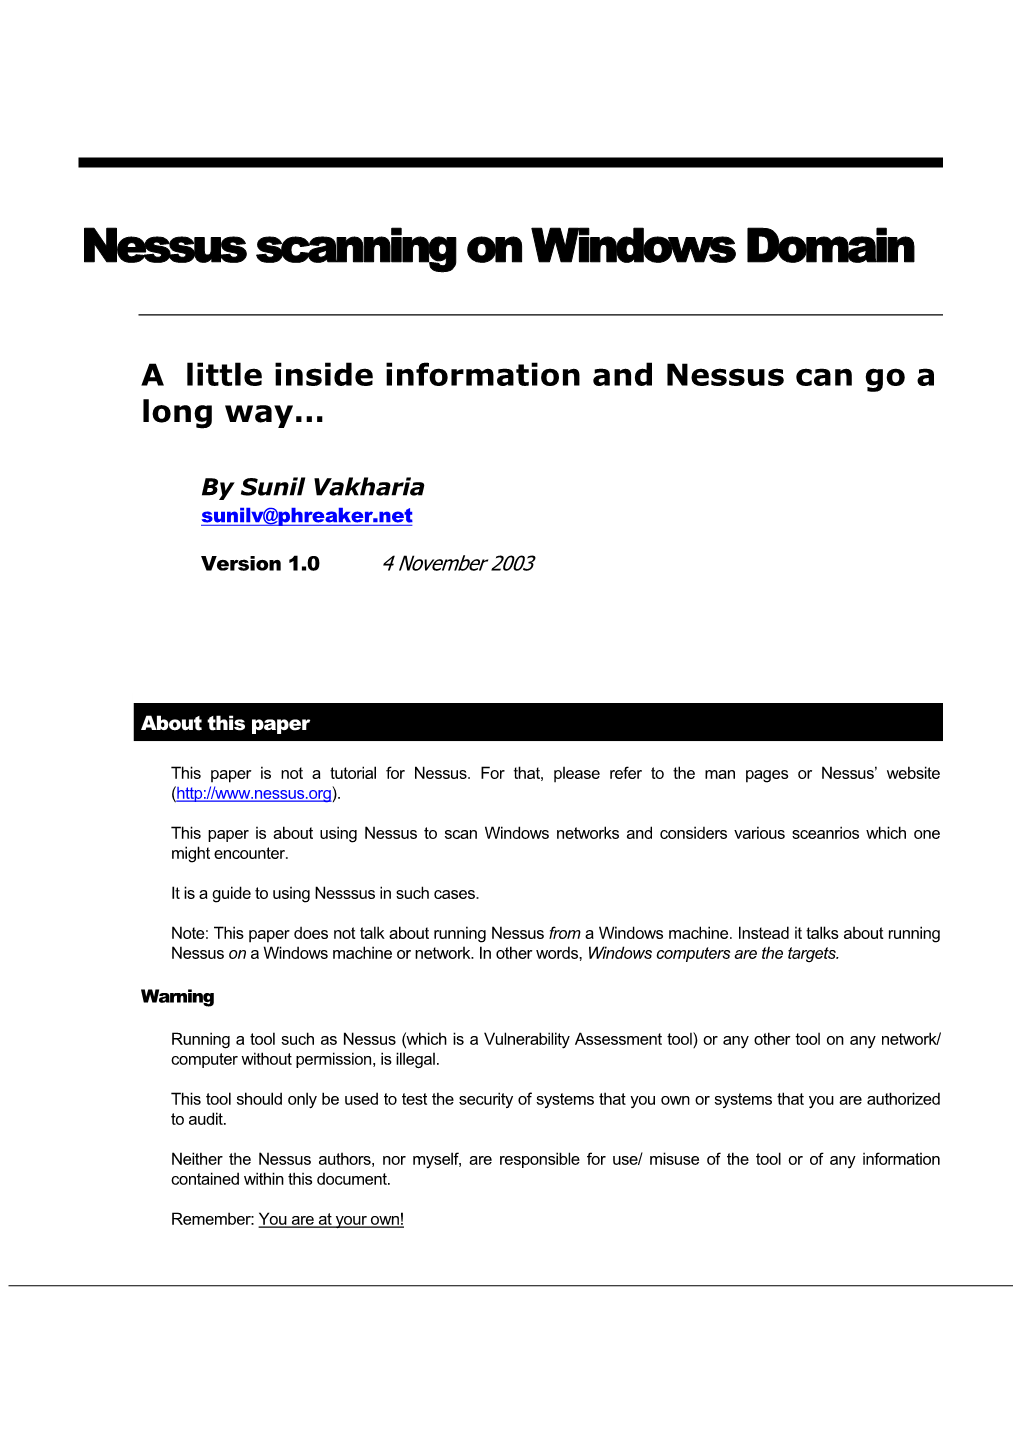 Nessus Scanning on Windows Domain